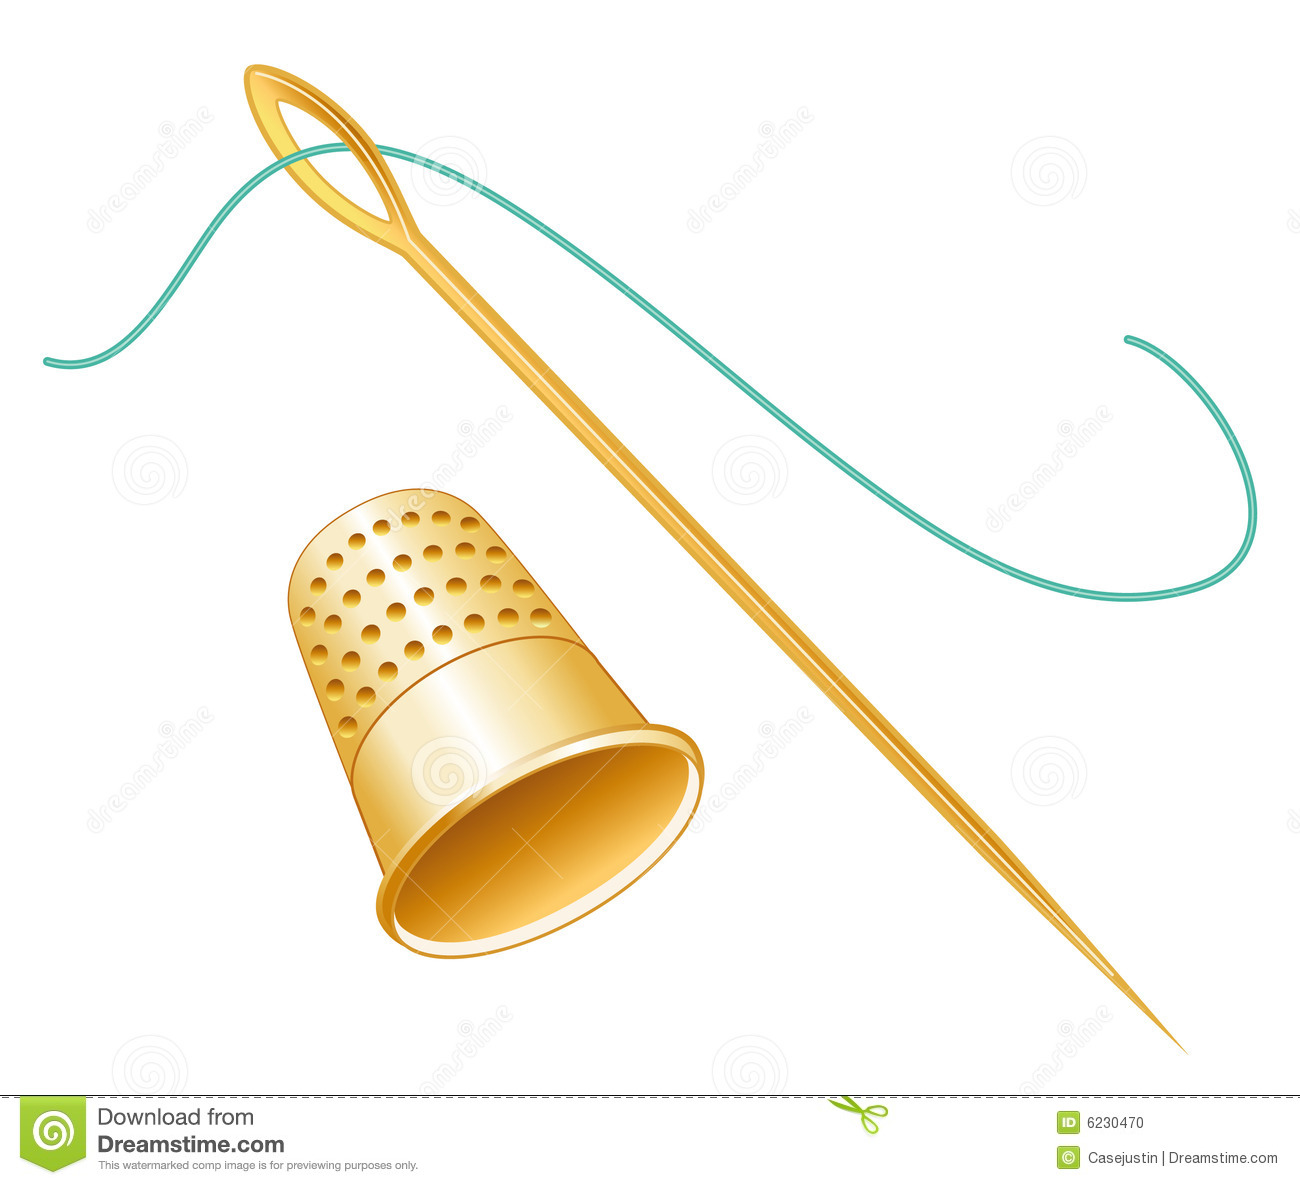 Golden Thimble Needle   Thread Stock Photo   Image  6230470